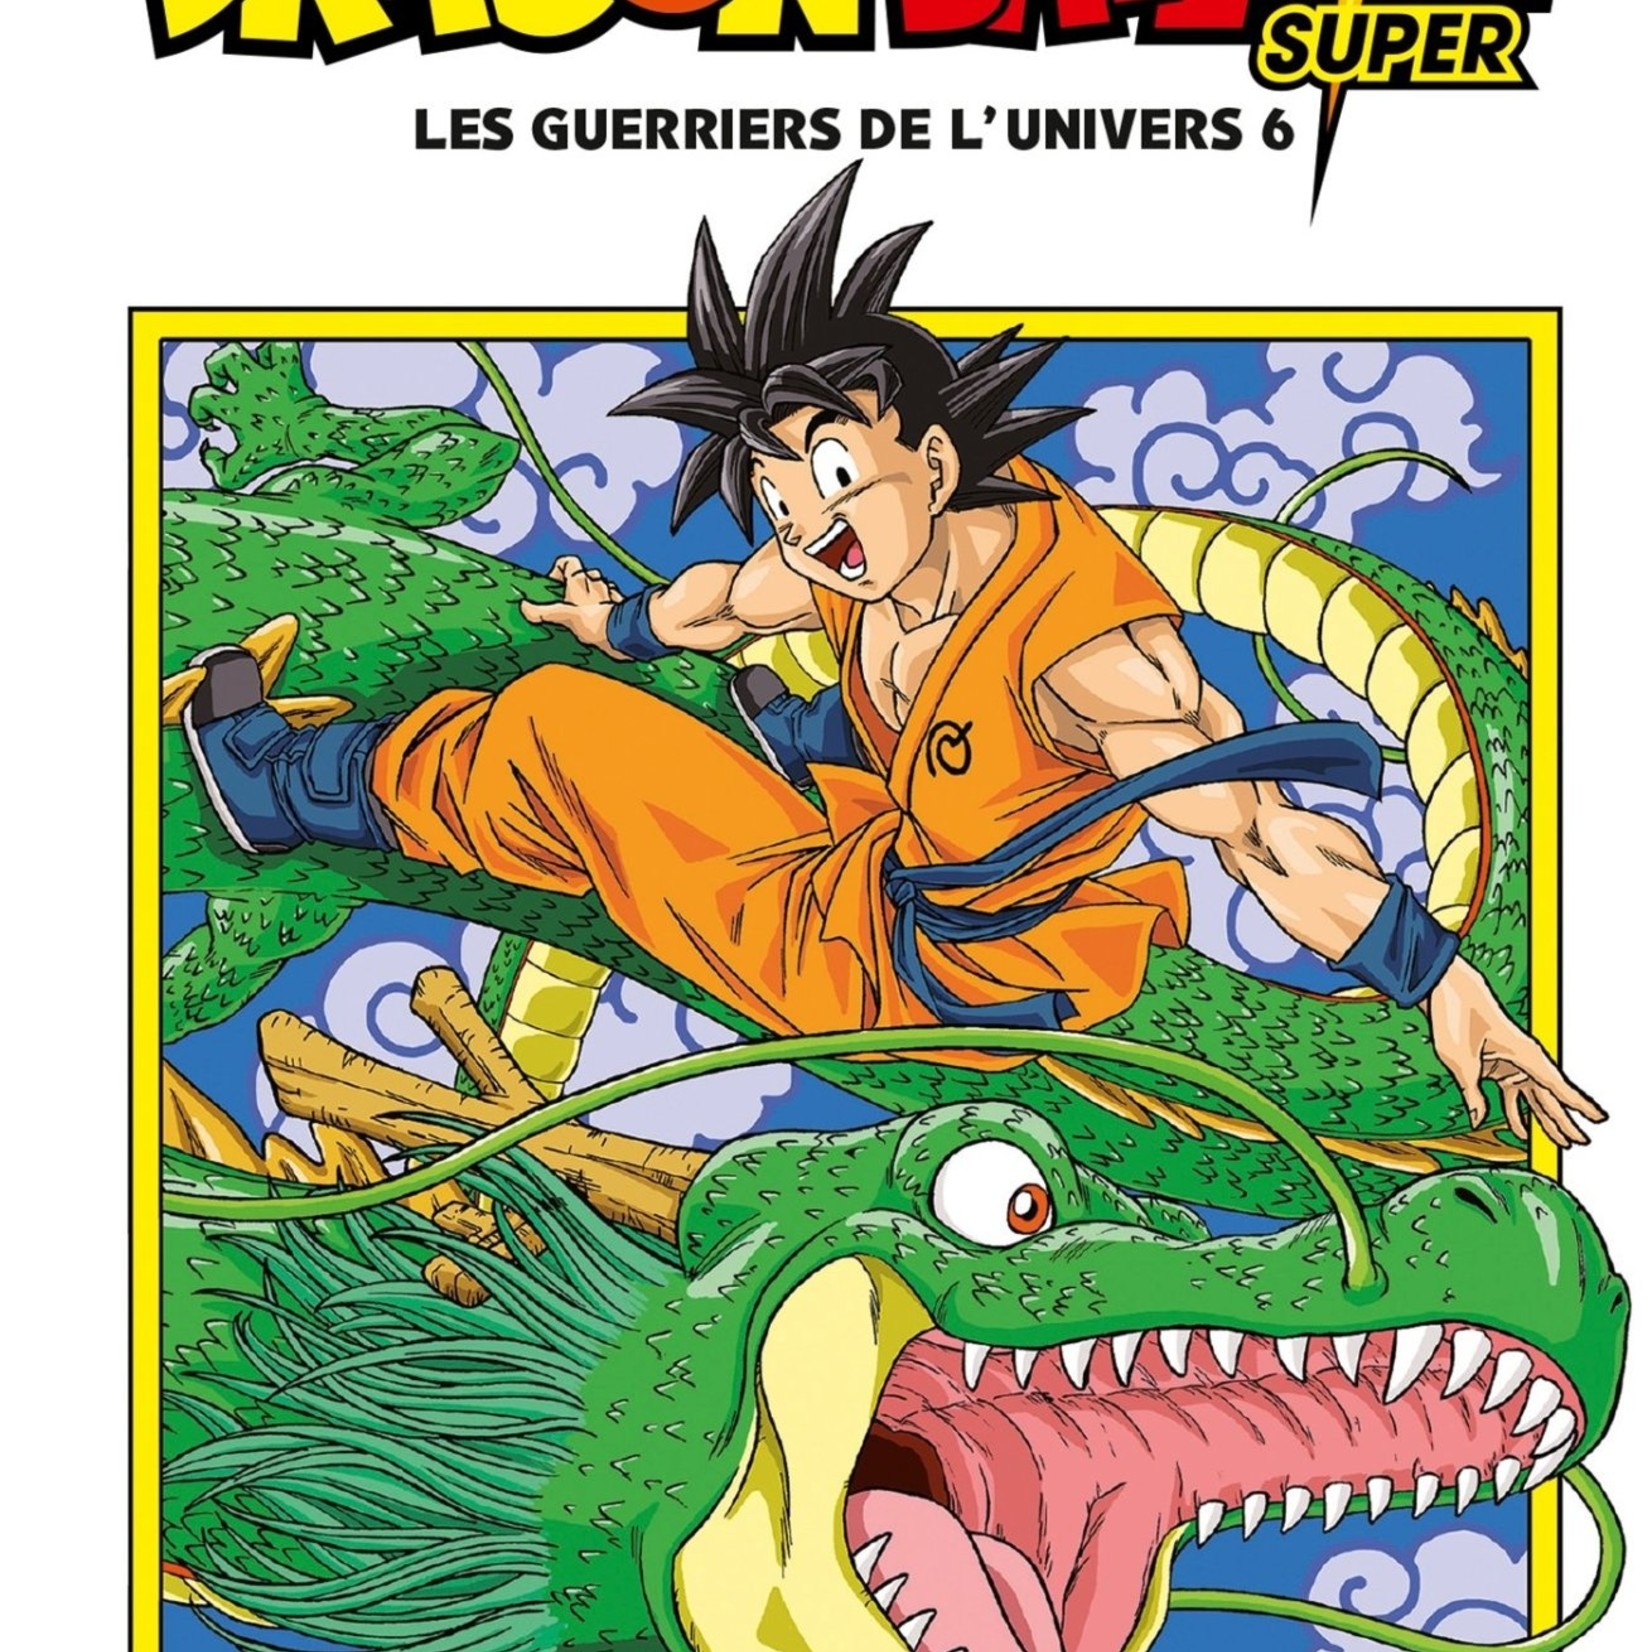 Glénat Manga - Dragonball Super Tome 01